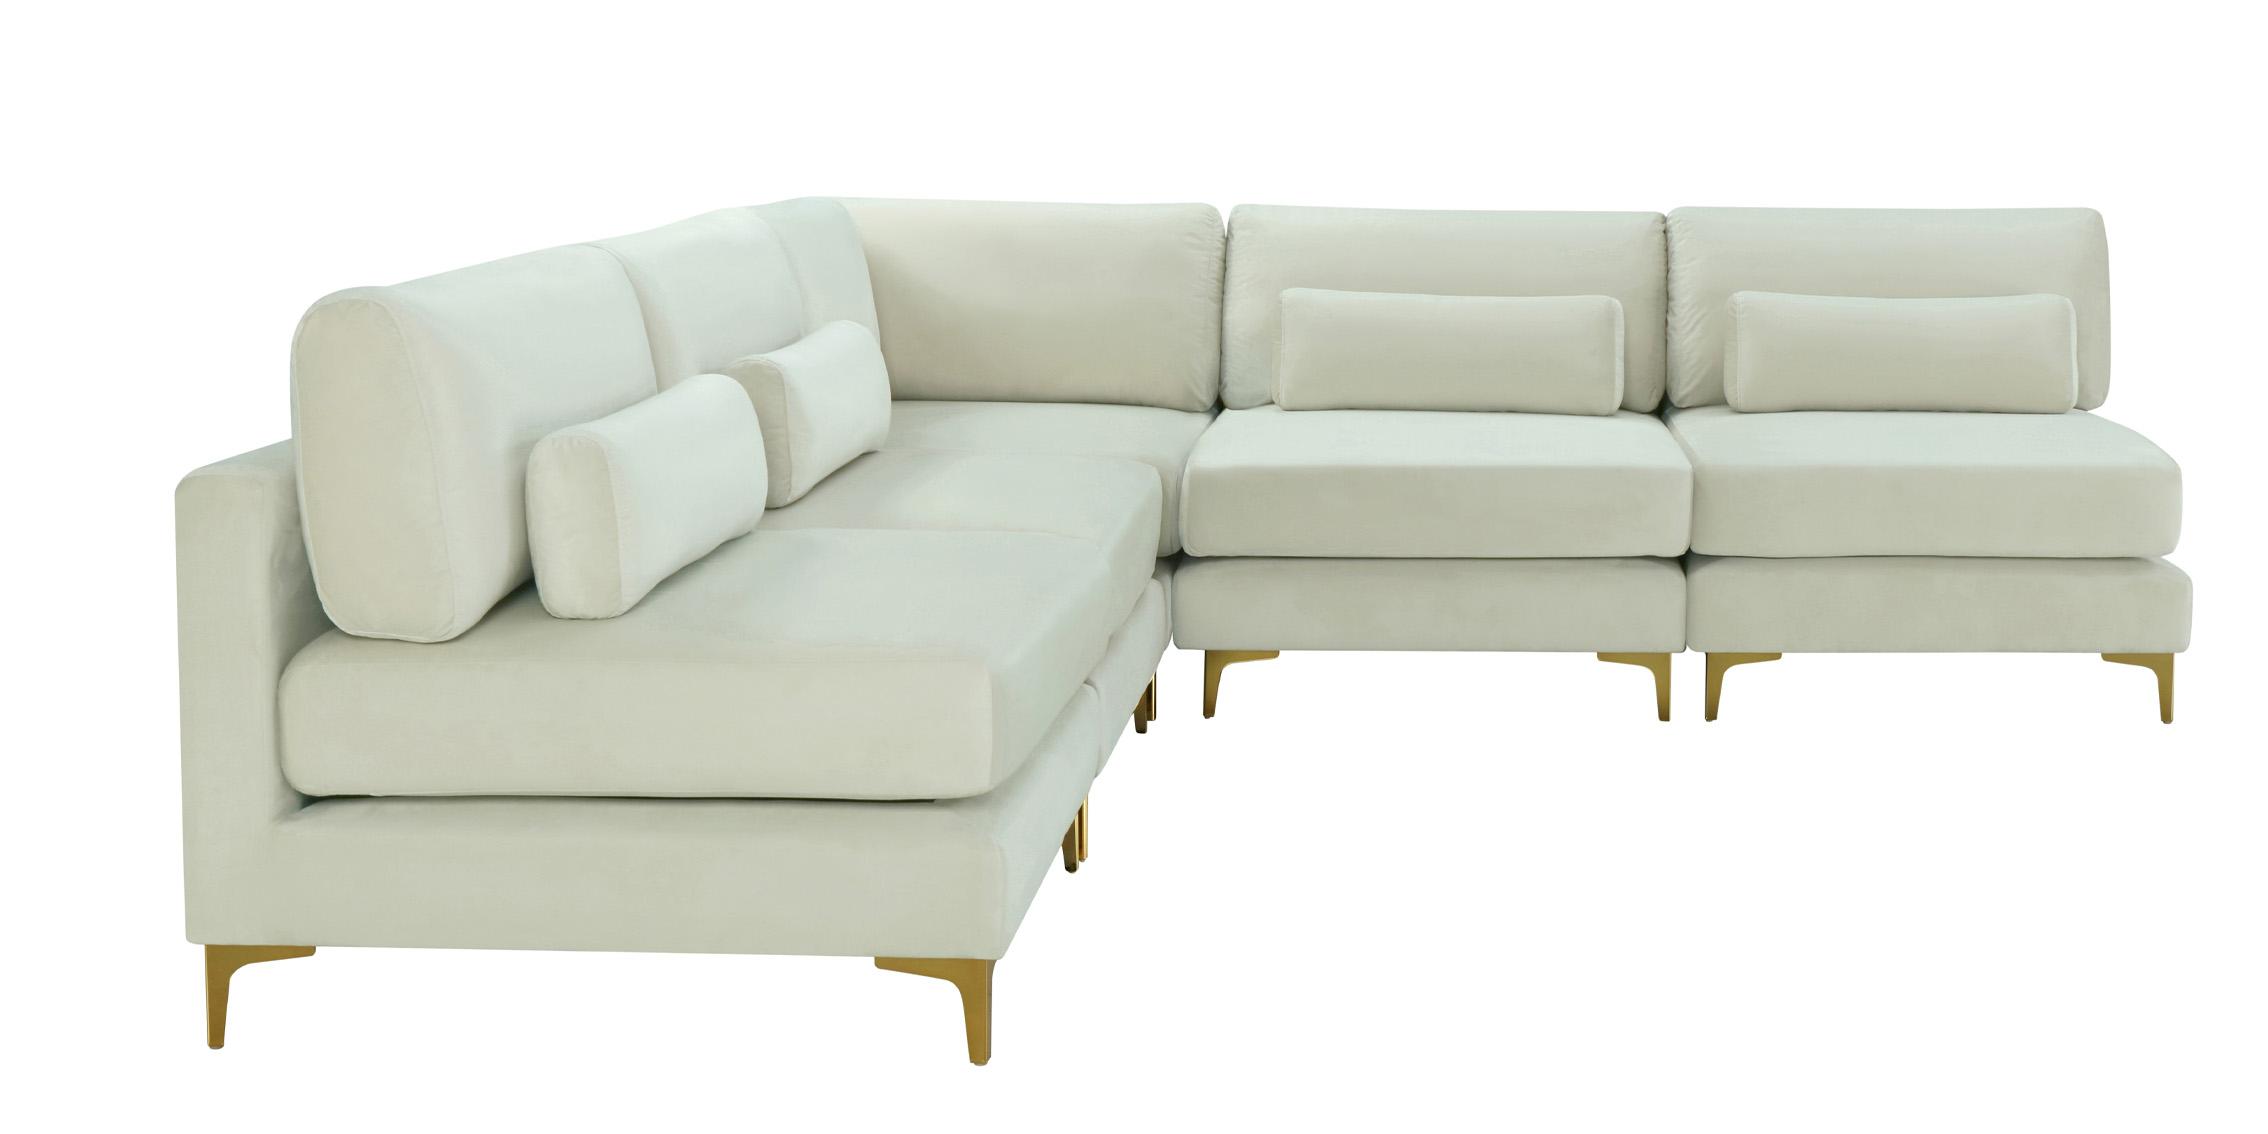 

    
Meridian Furniture JULIA 605Cream-Sec5B Modular Sectional Sofa Cream 605Cream-Sec5B
